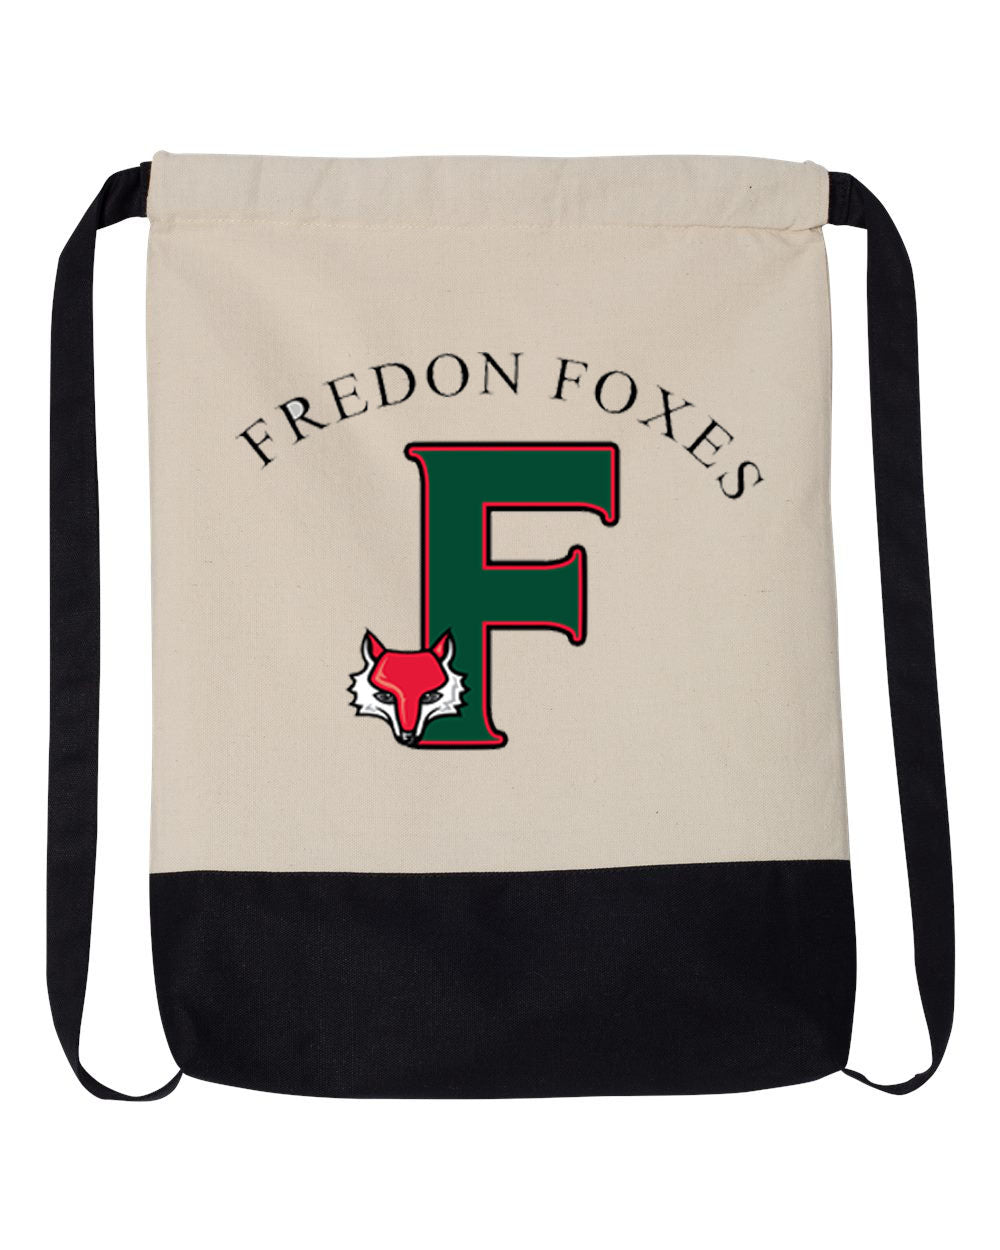 Fredon Design 9 Drawstring Bag